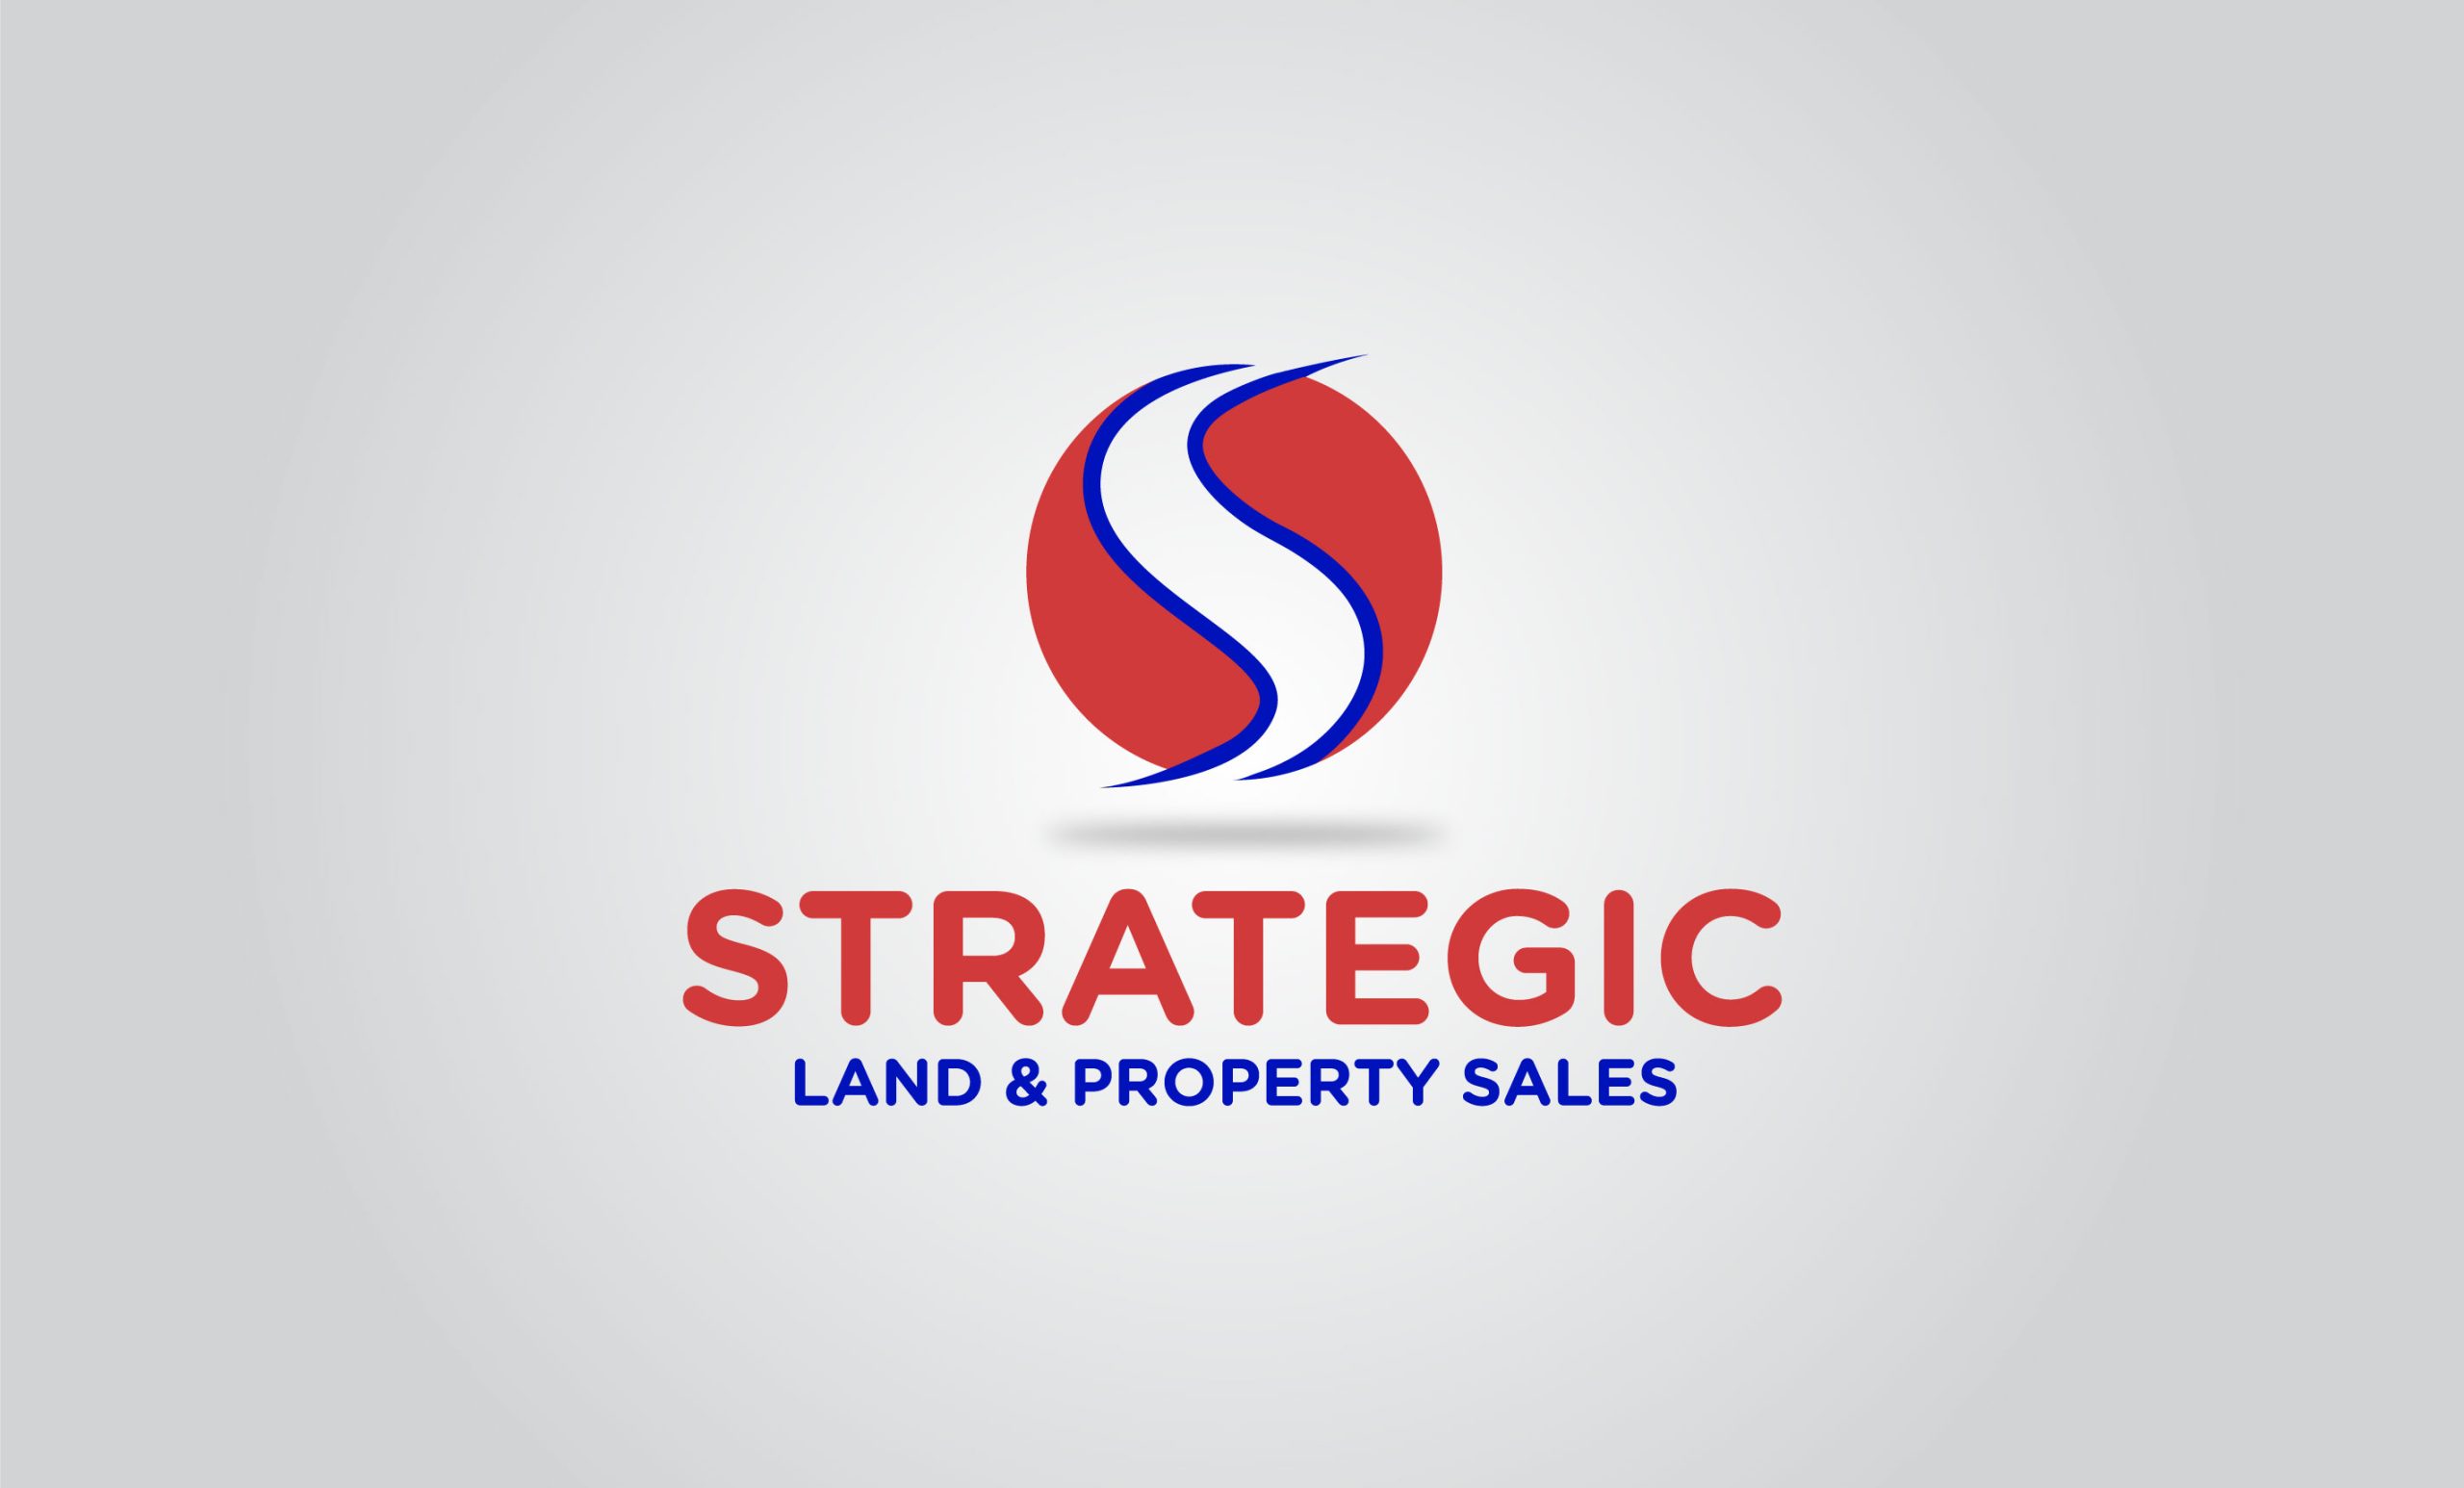 Strategic Land & Property Sales